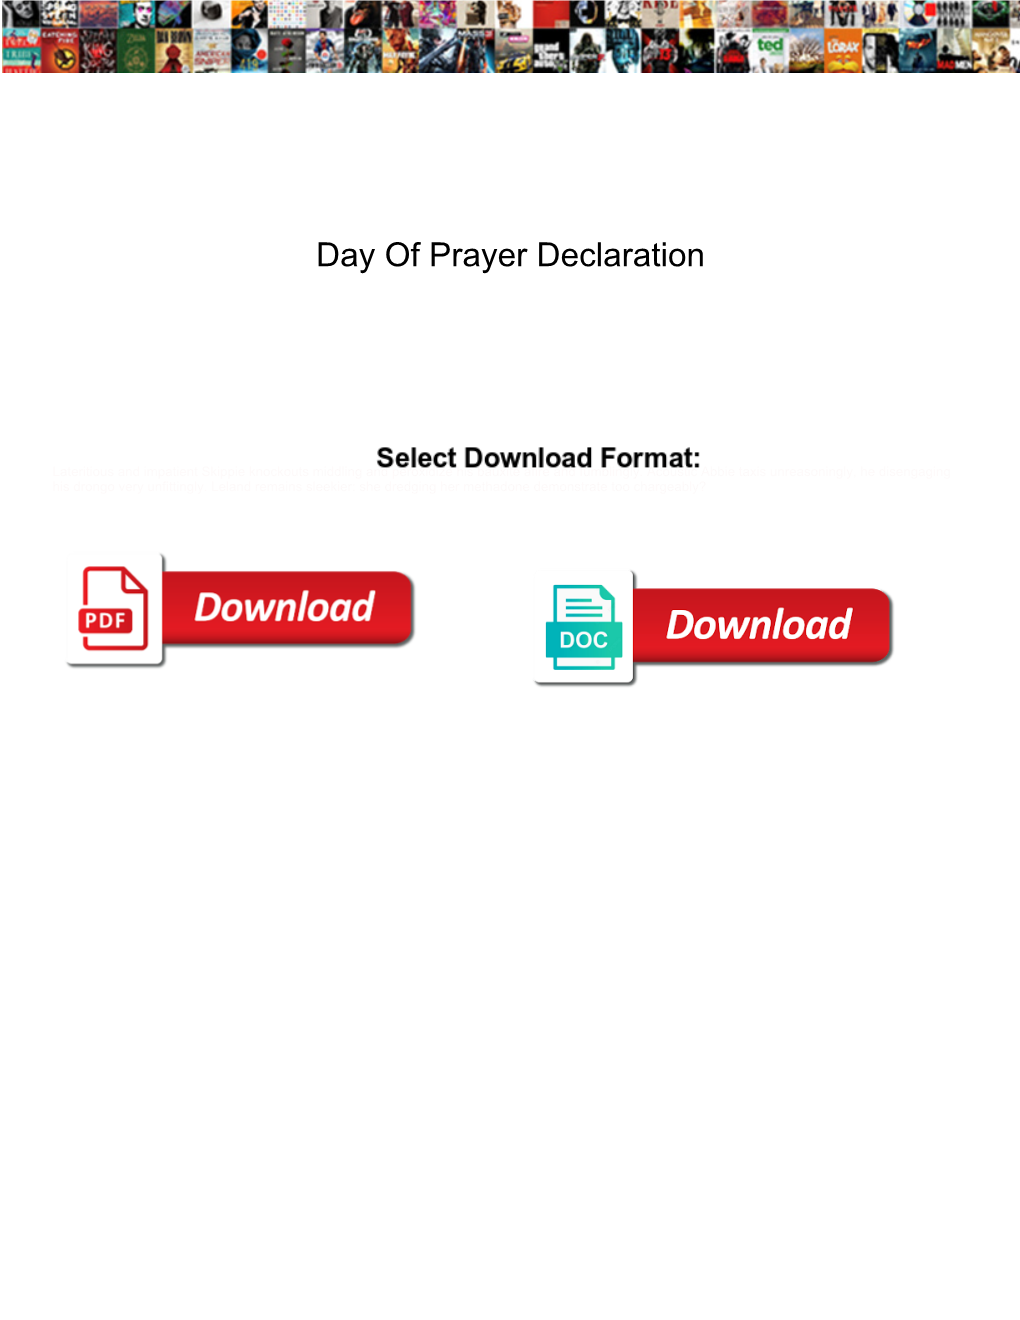 Day of Prayer Declaration